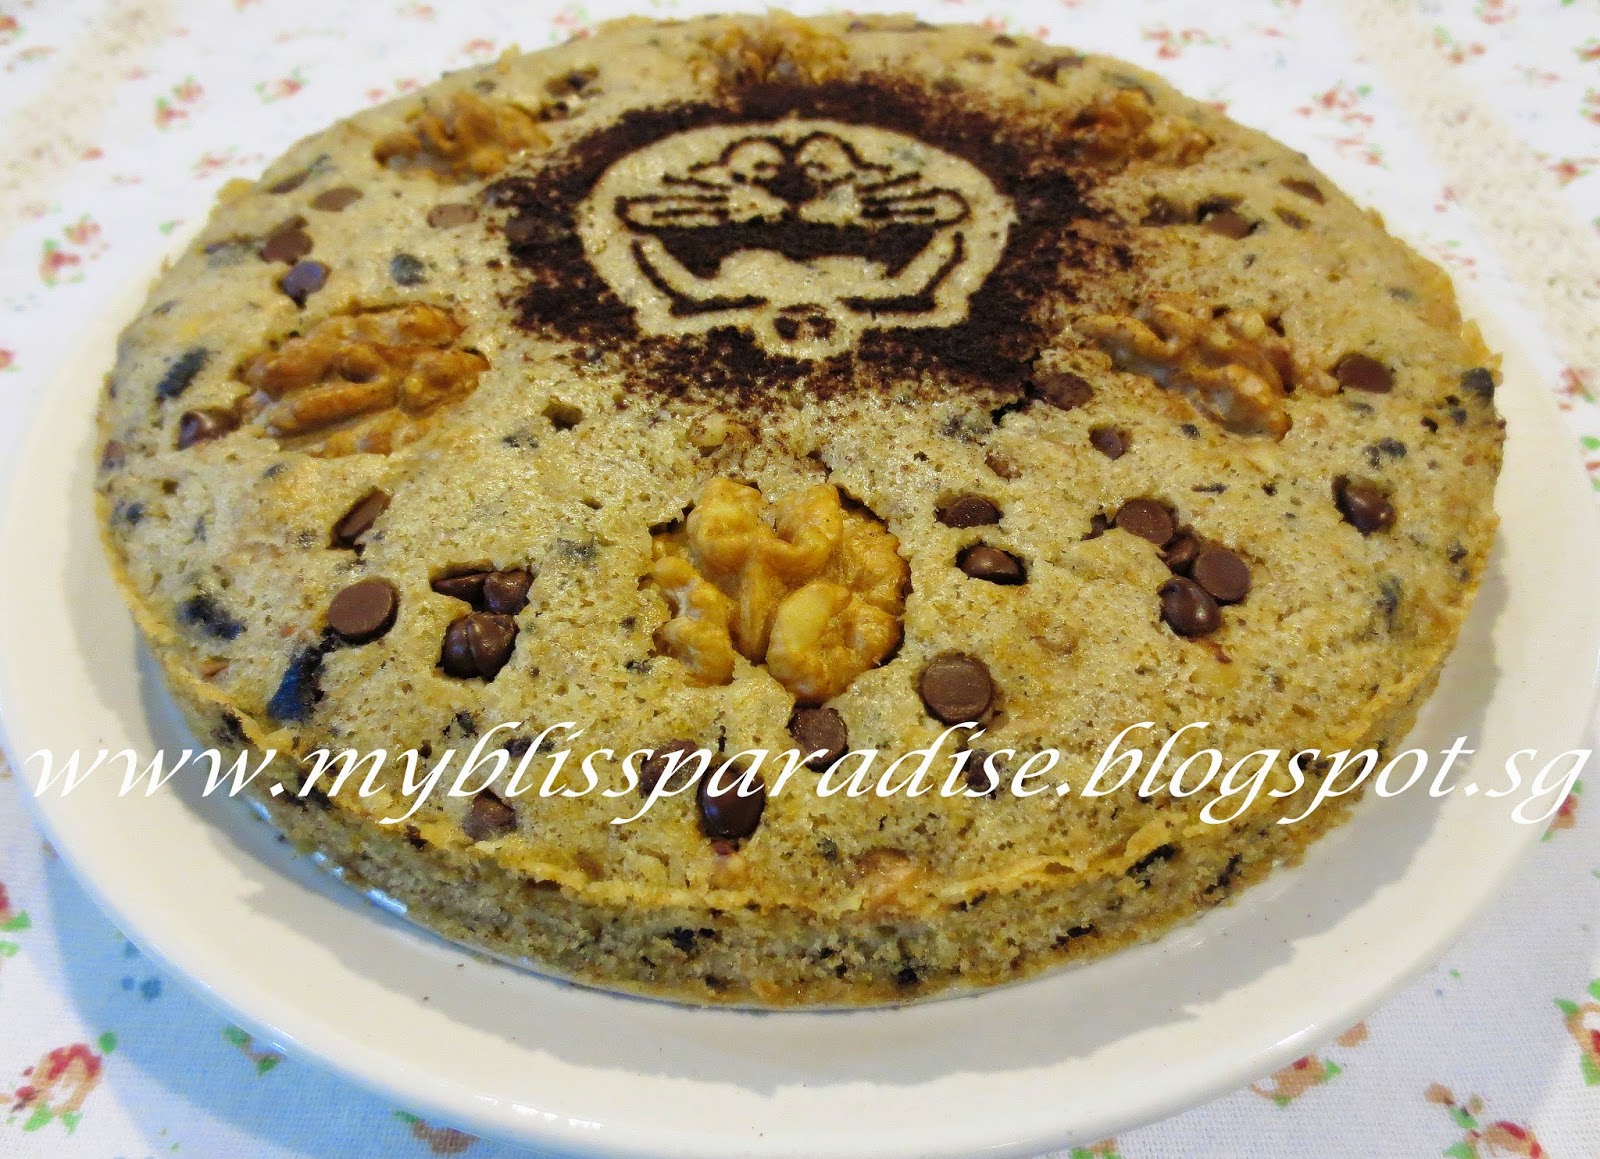 http://myblissparadise.blogspot.sg/2014/07/doraemon-walnut-cake-21-jul-14.html